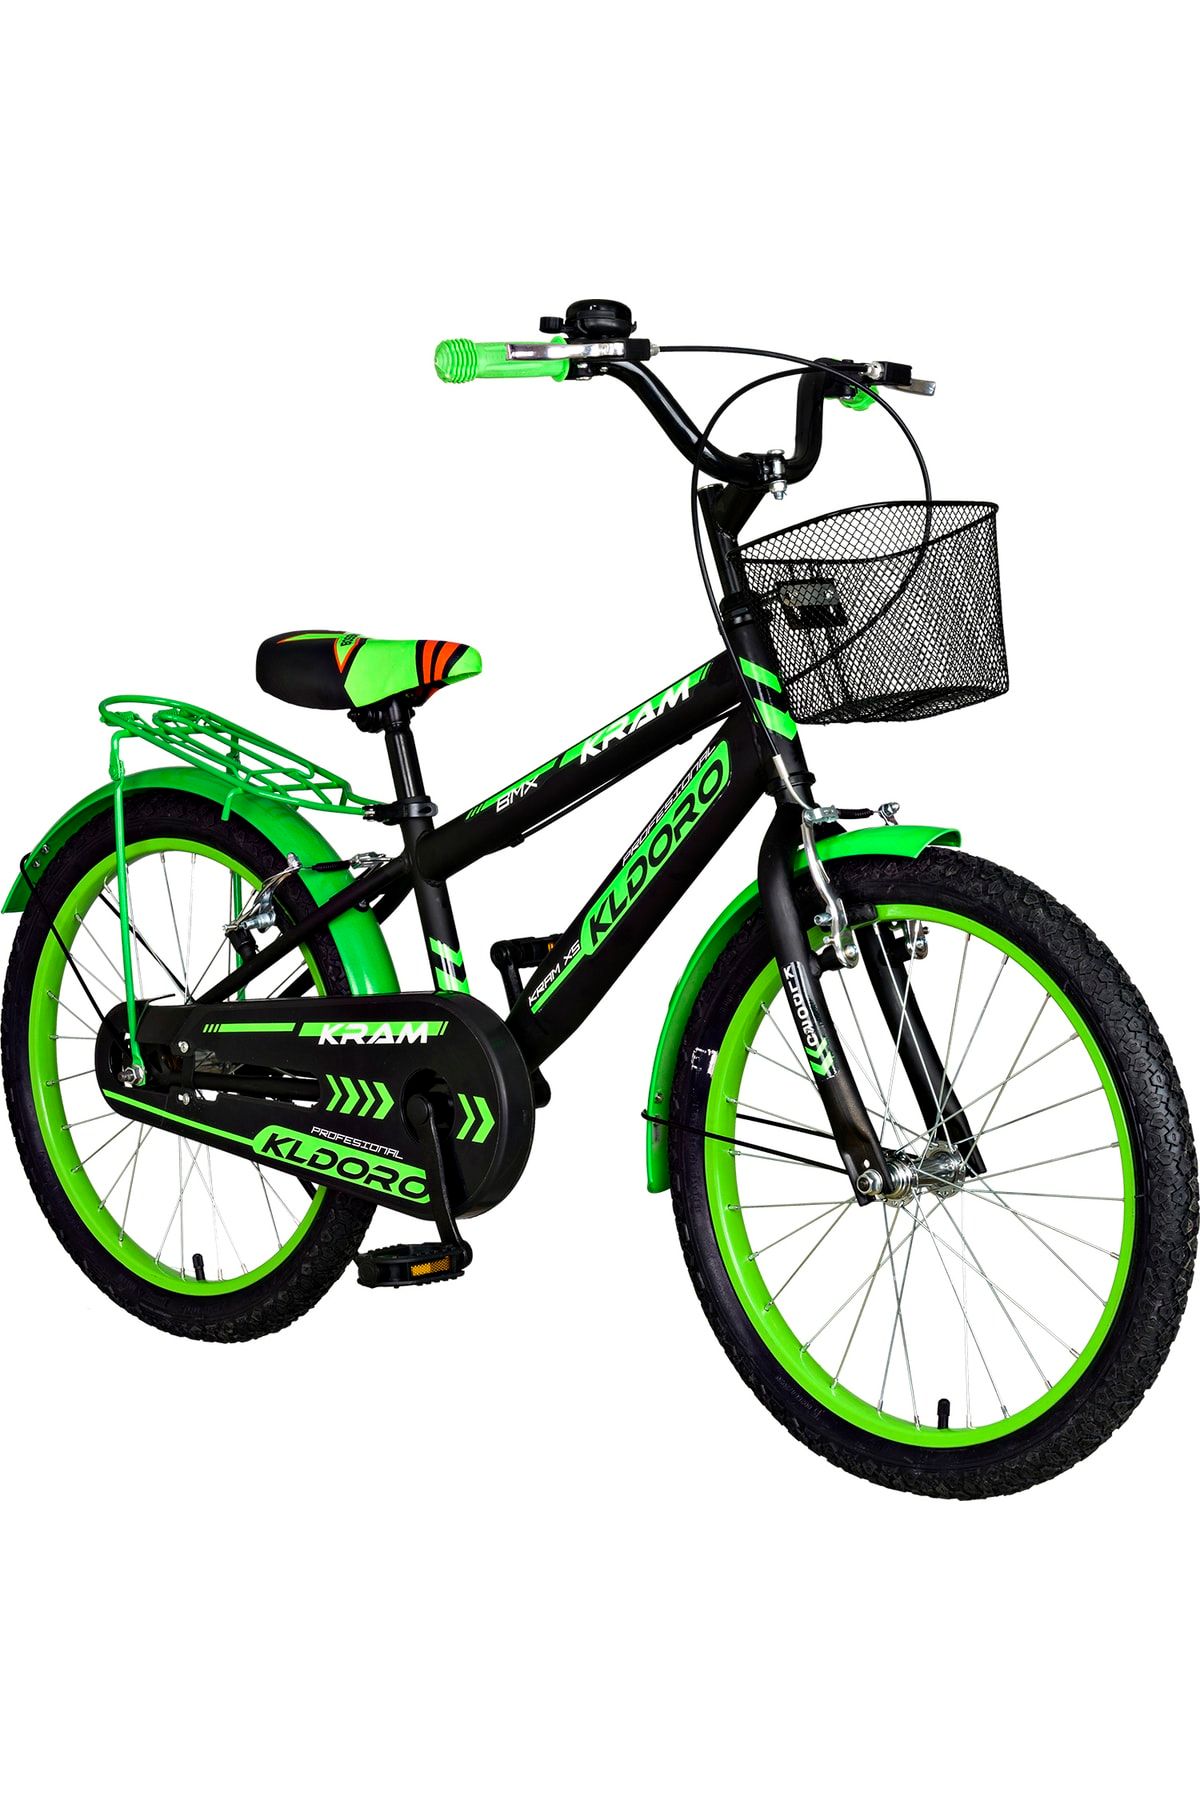 Kldoro Kd-20300 Çelik Kadro 20 Jant Bisiklet Bagajlı Erkek Çocuk Bisikleti 000169.000063